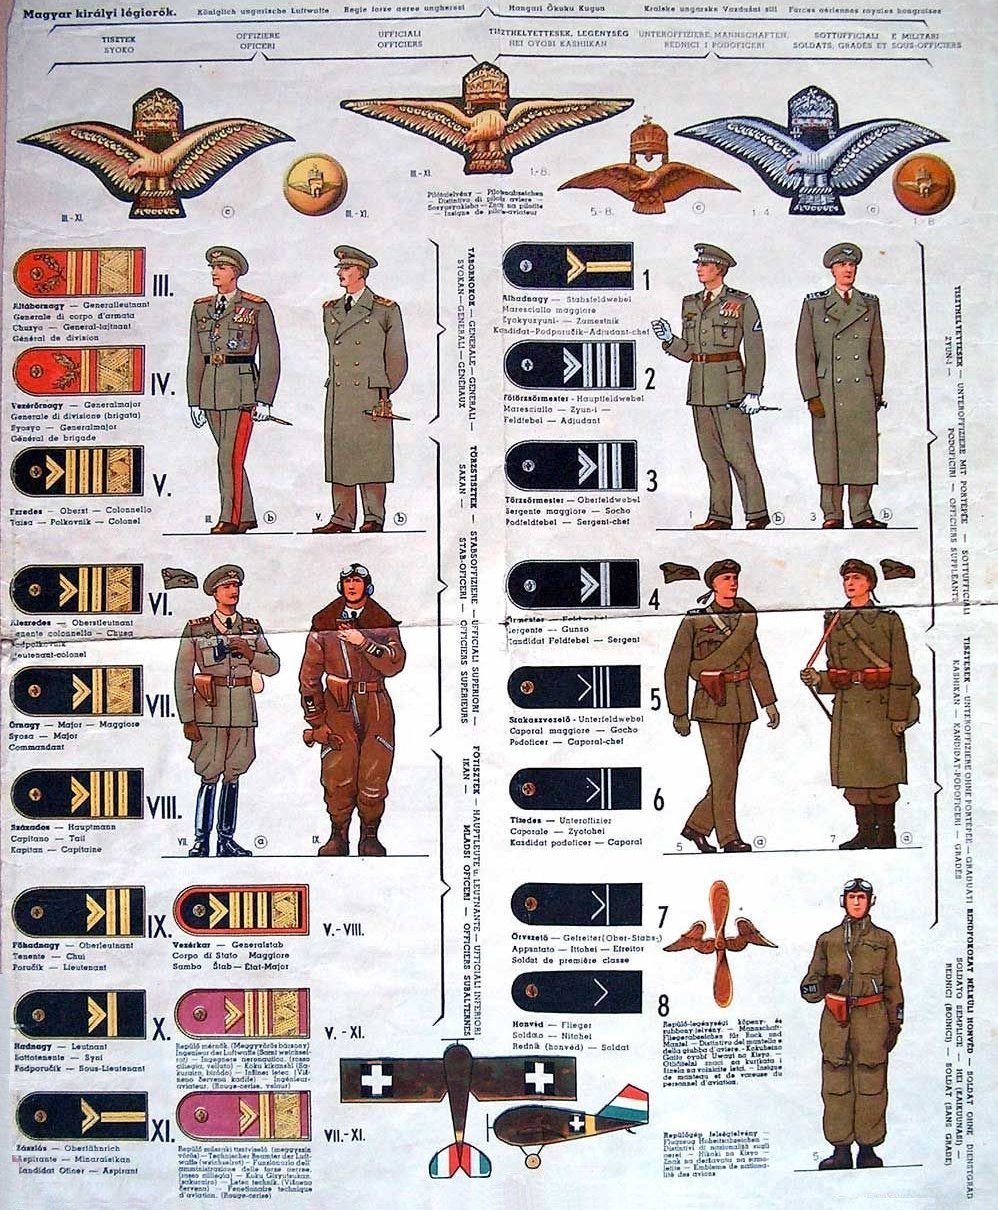 Royal Hungarian Air Force Uniforms and Ranks